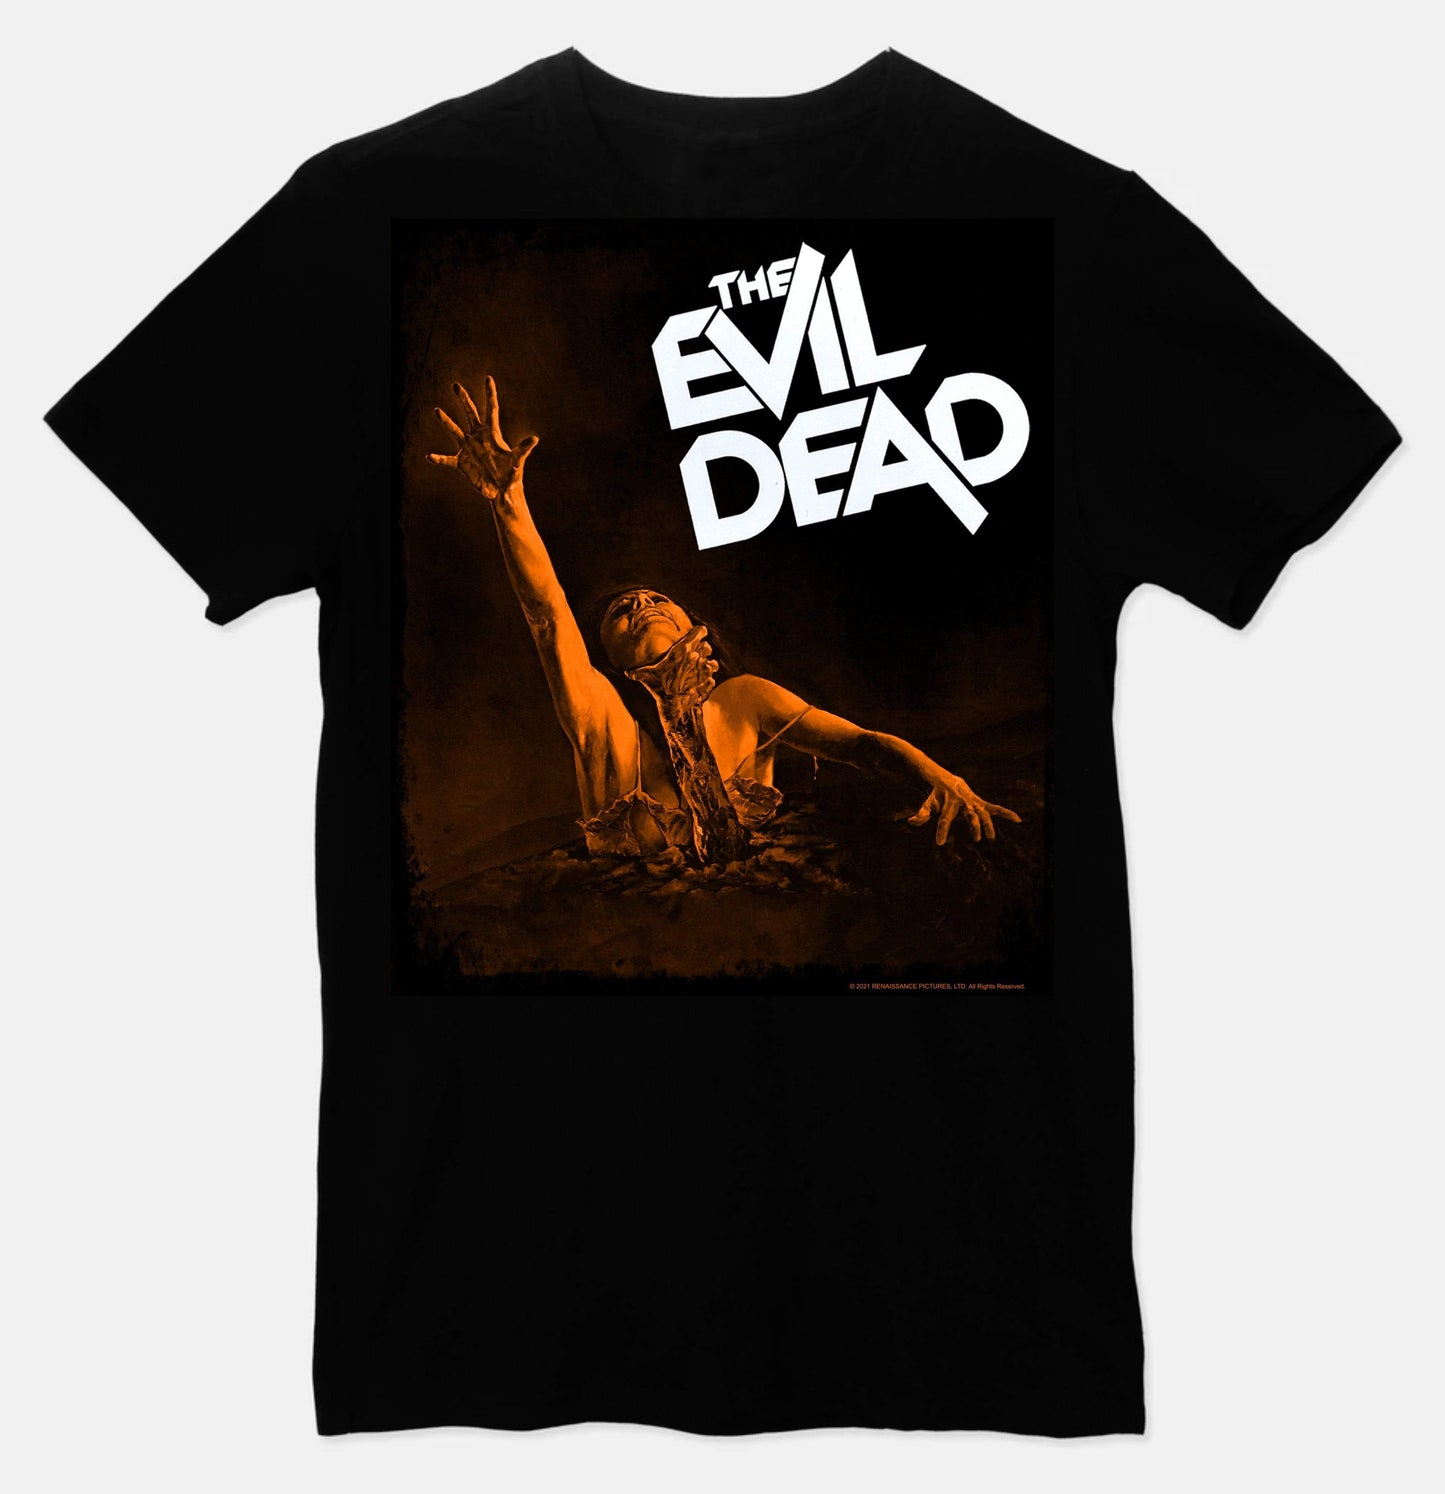 Copy of EVIL DEAD T-shirt : 40th Anniversary #1